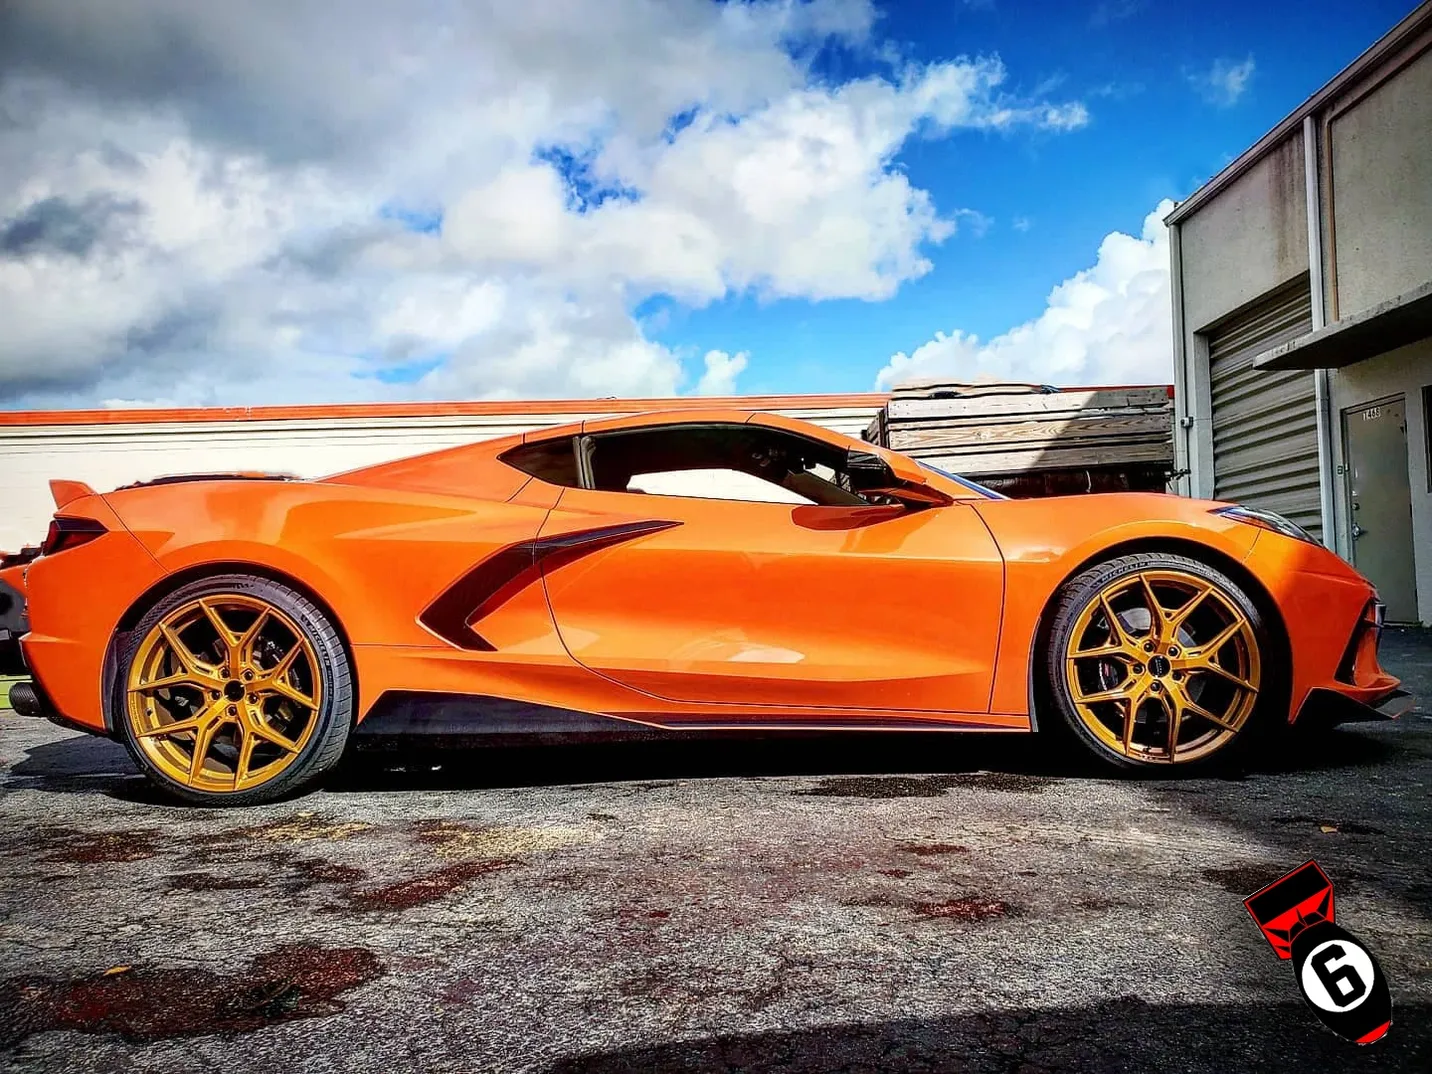 A beautiful sleek custom designed corvette with golden rims